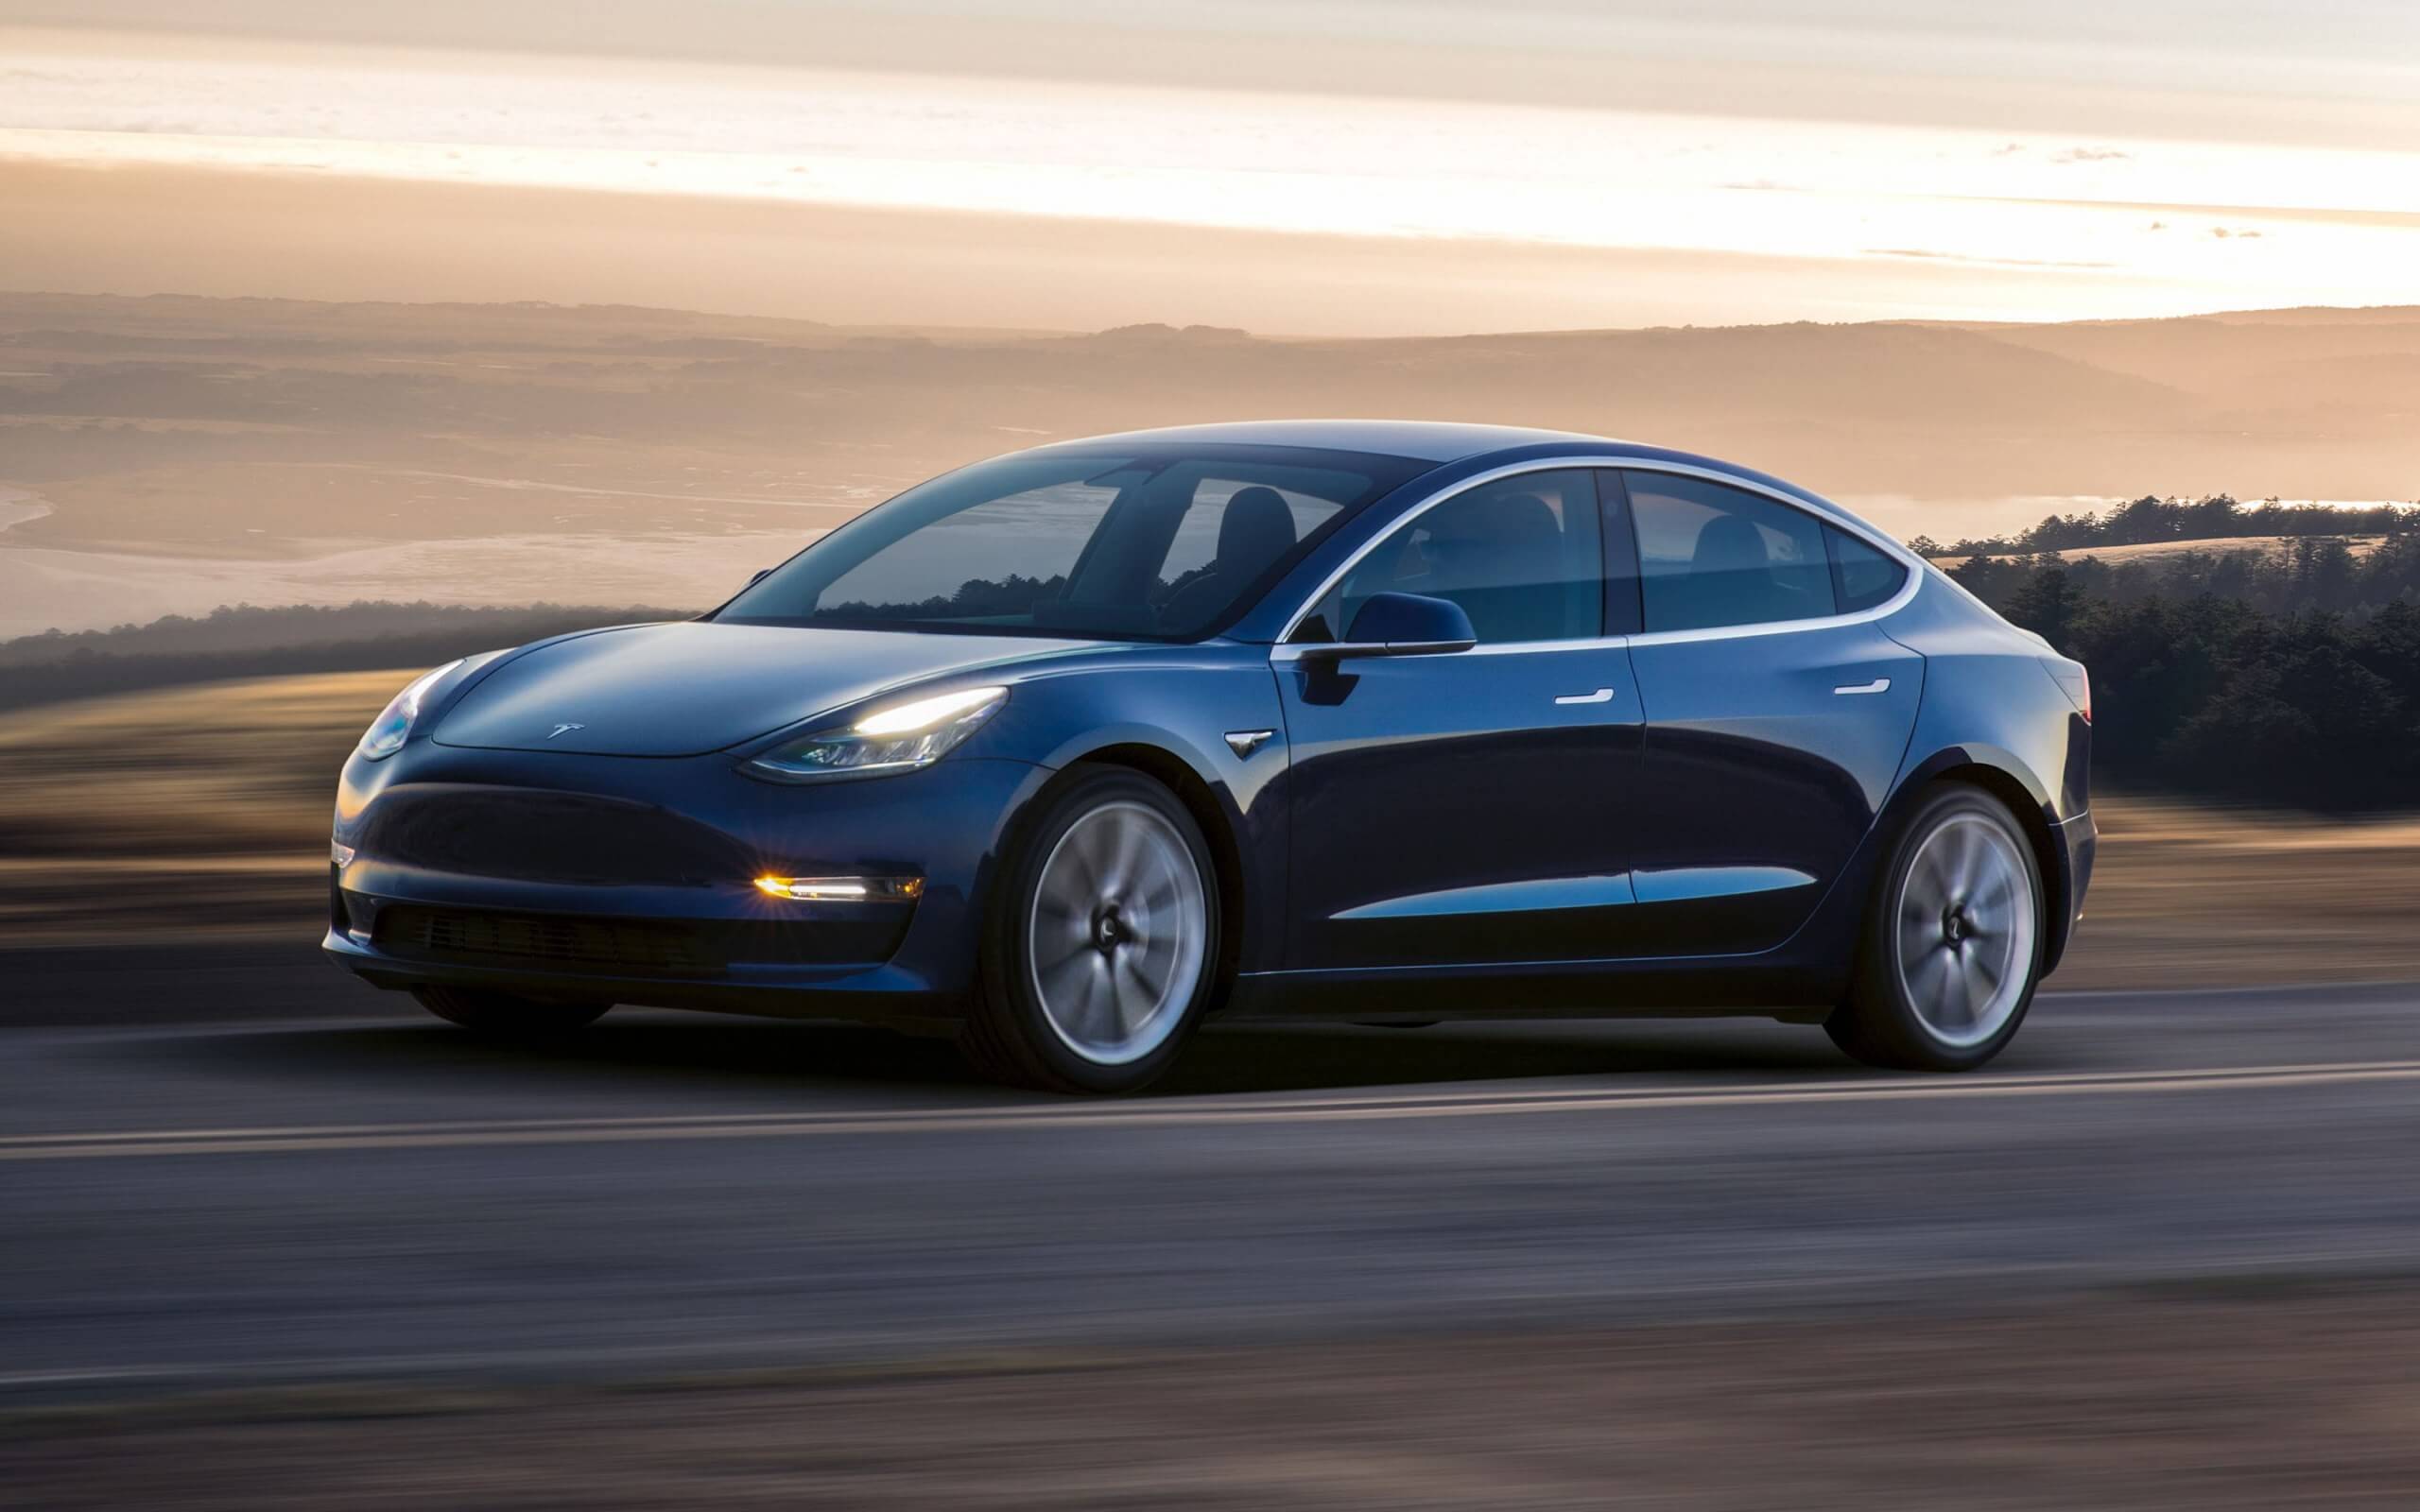 Tesla Autopilot is steering towards lane dividers again